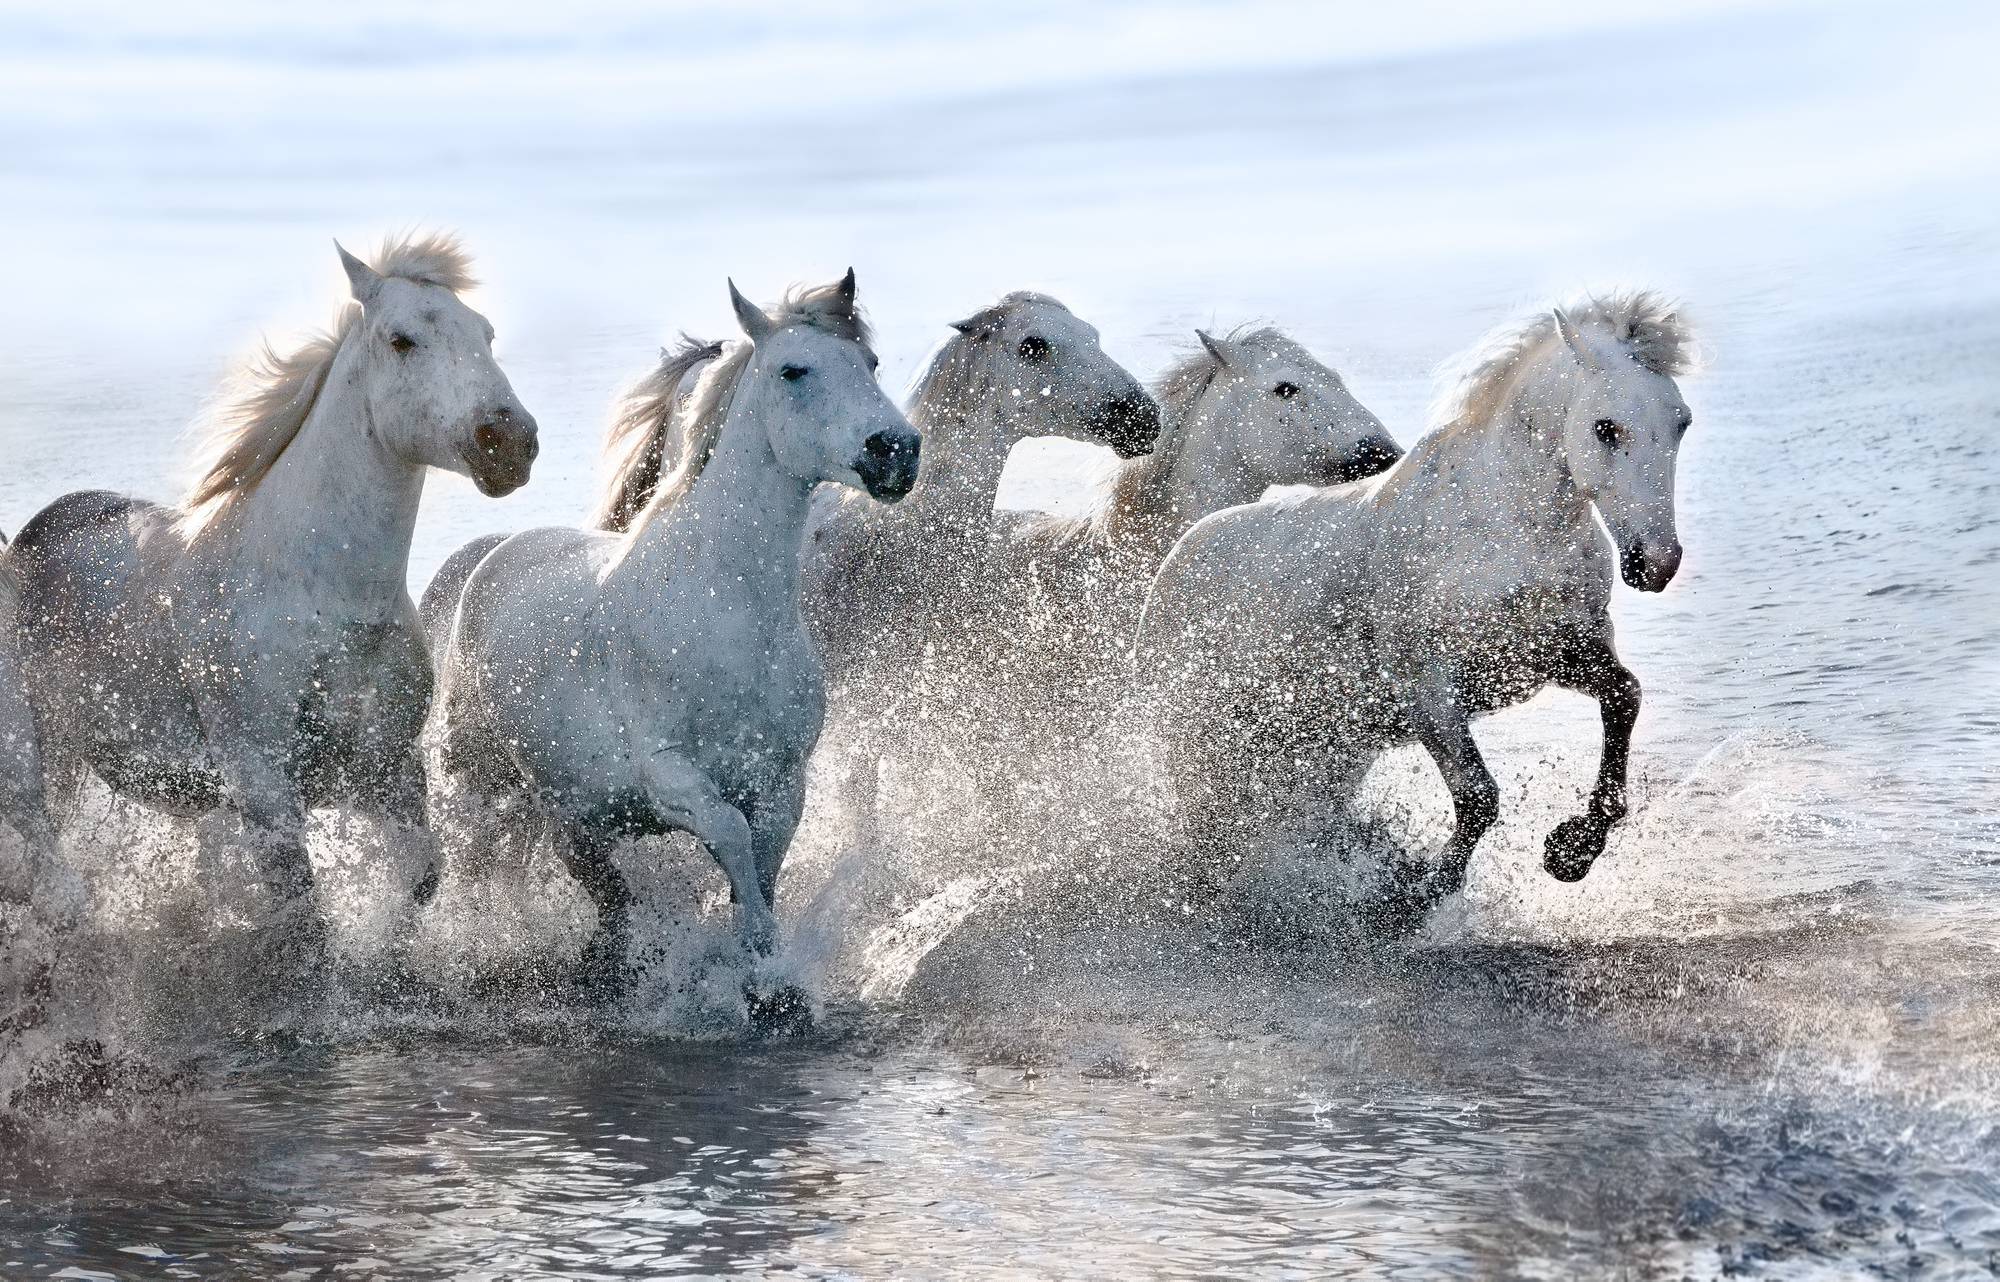 tilestwra.gr | Λευκά άλογα φωτογραφίζονται να τρέχουν στη θάλασσα! Η αίσθηση της ελευθερίας στο αποκορύφωμά της… 